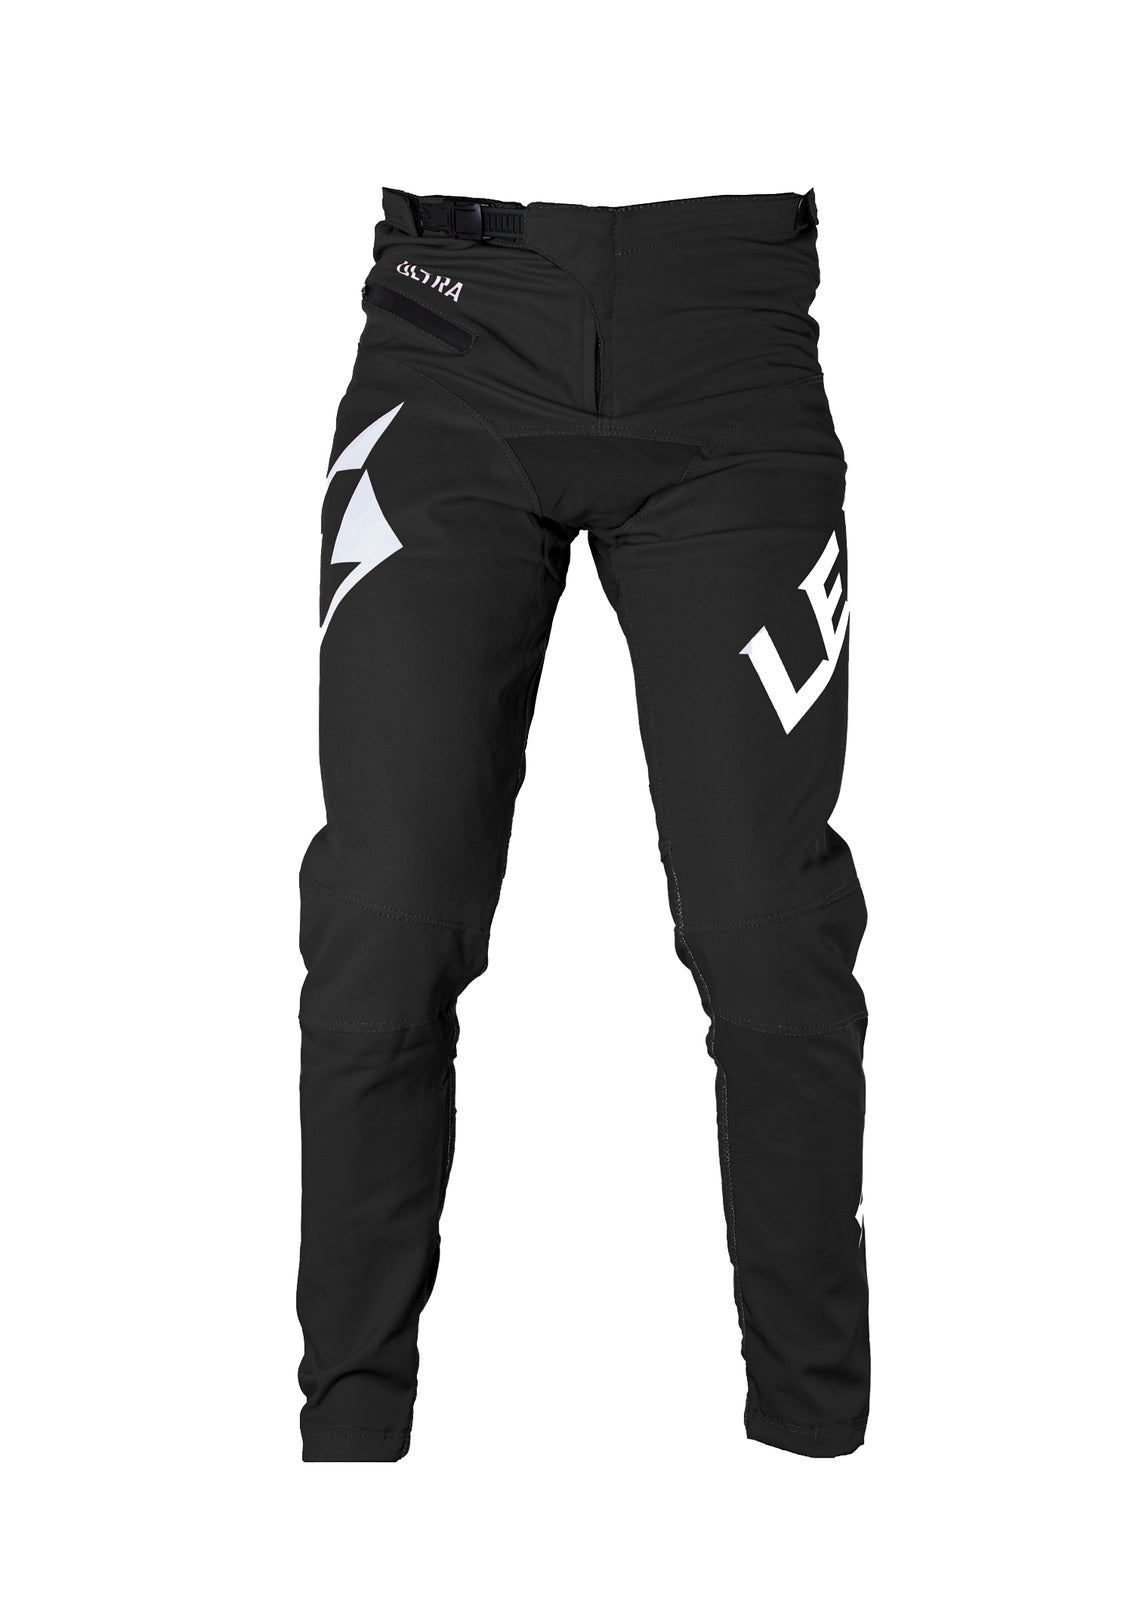 LEAD Ultra Race Pant (Black/White)